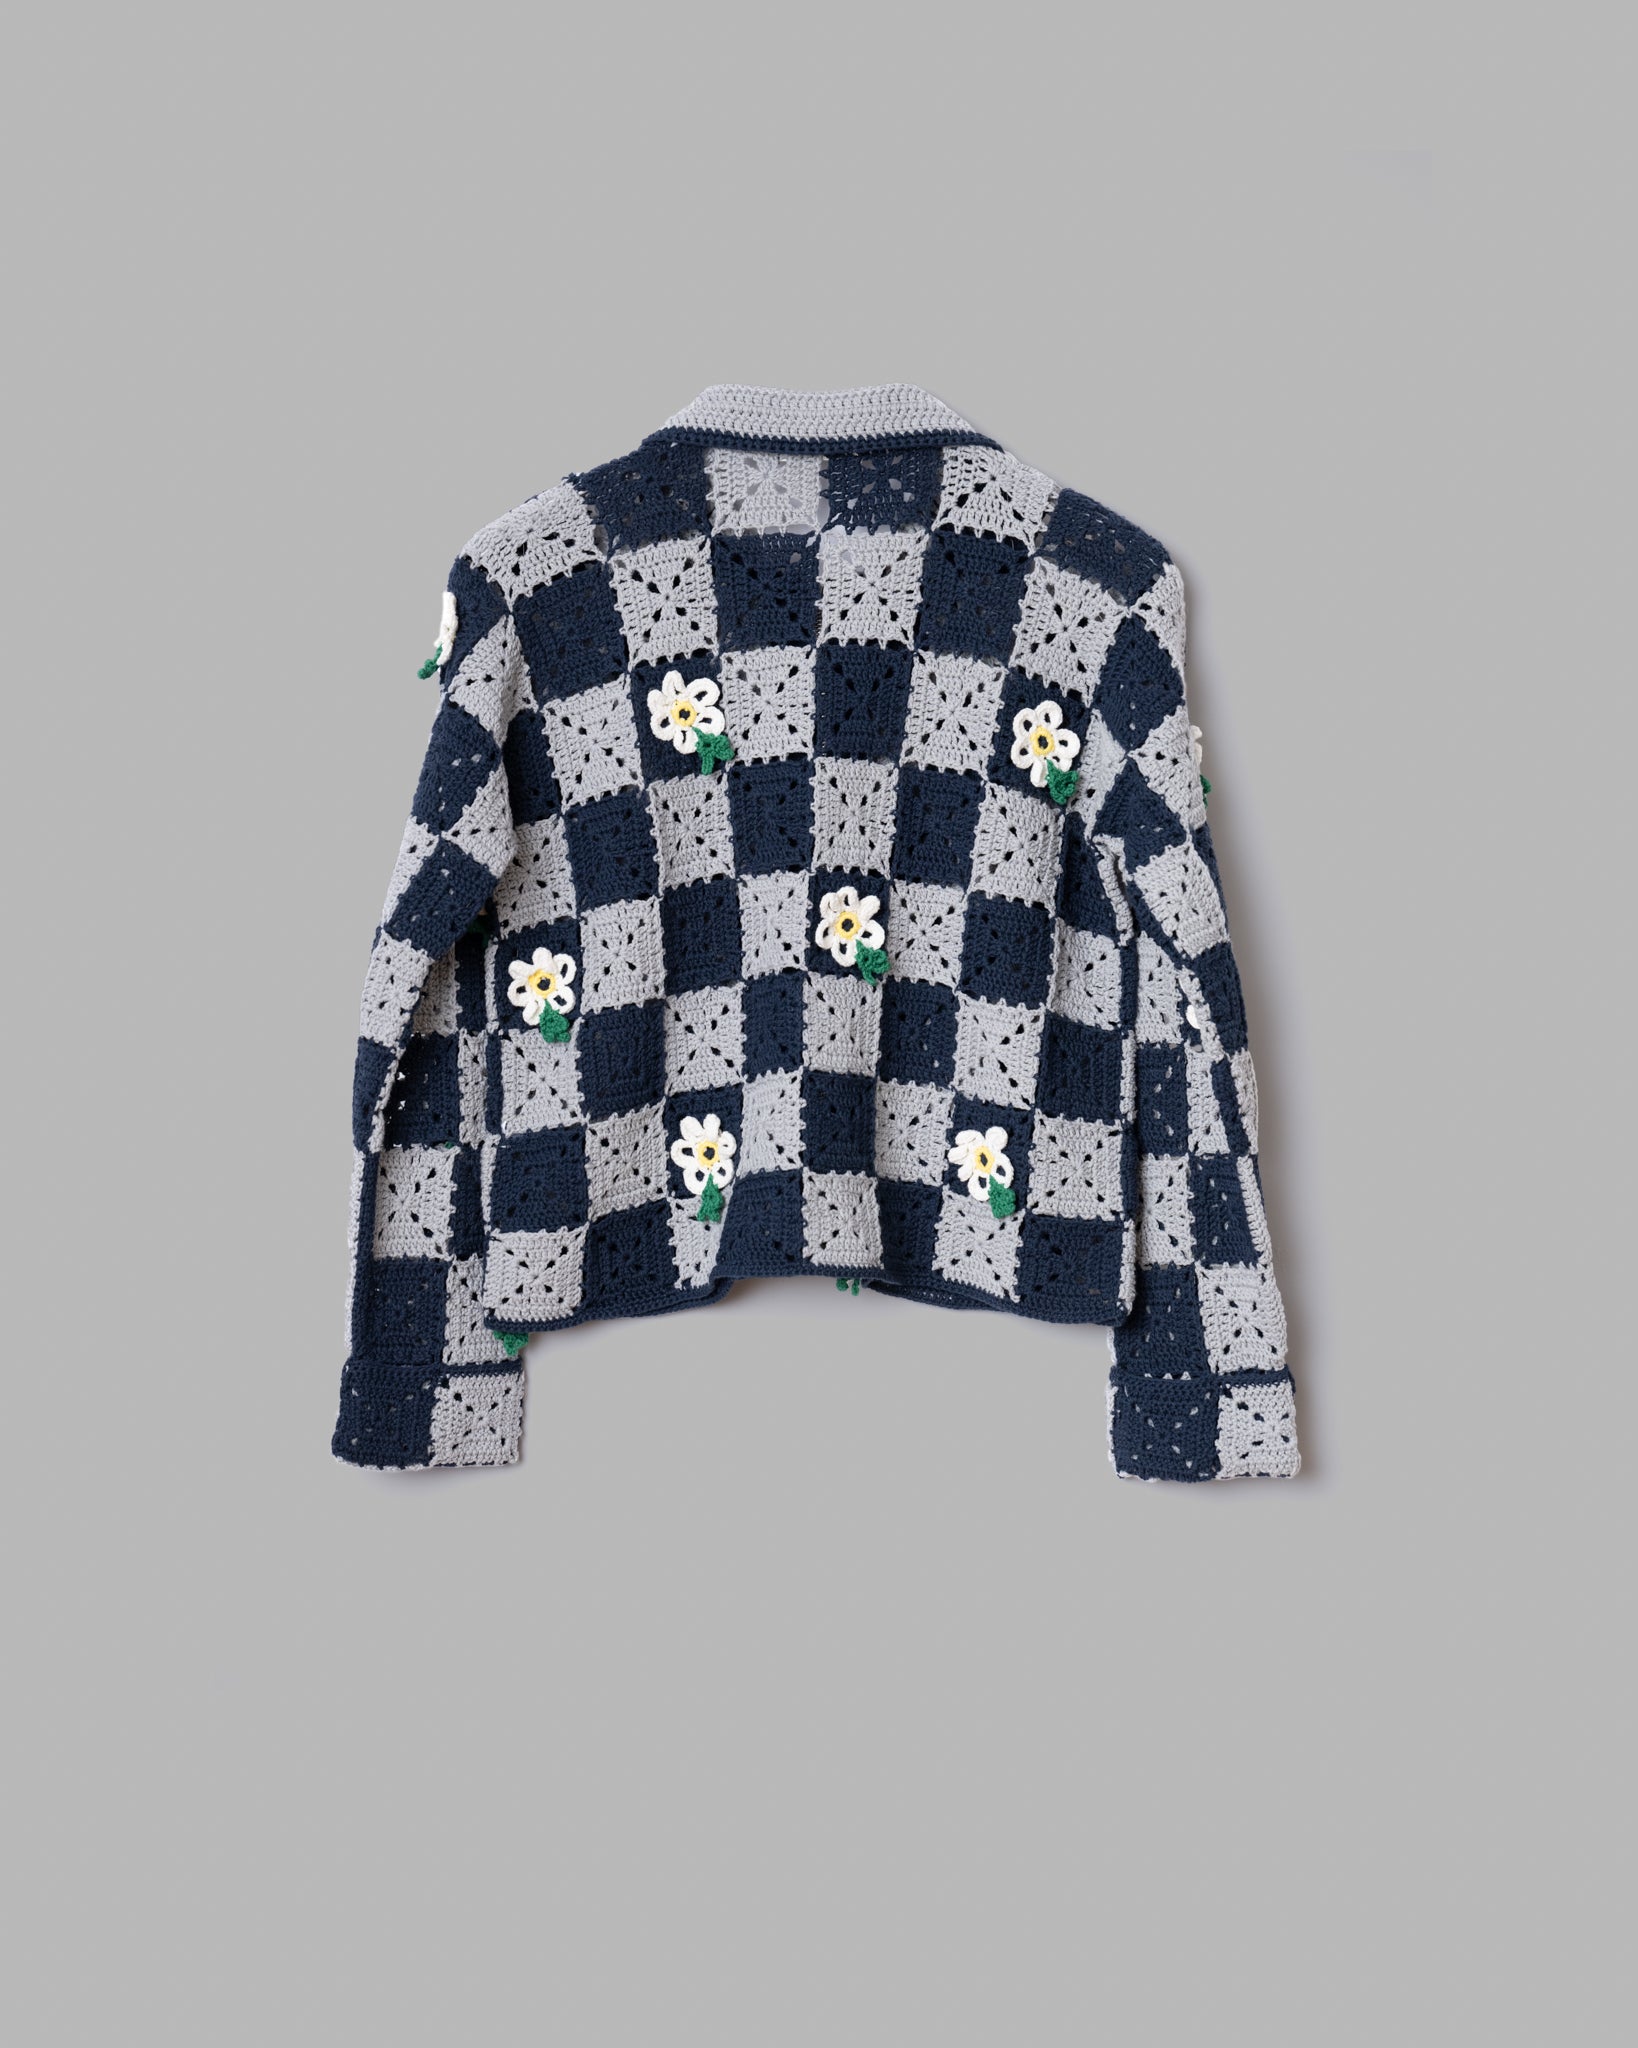 Crochet Flower Motif Hand Knit Jacket -Navy / Gray